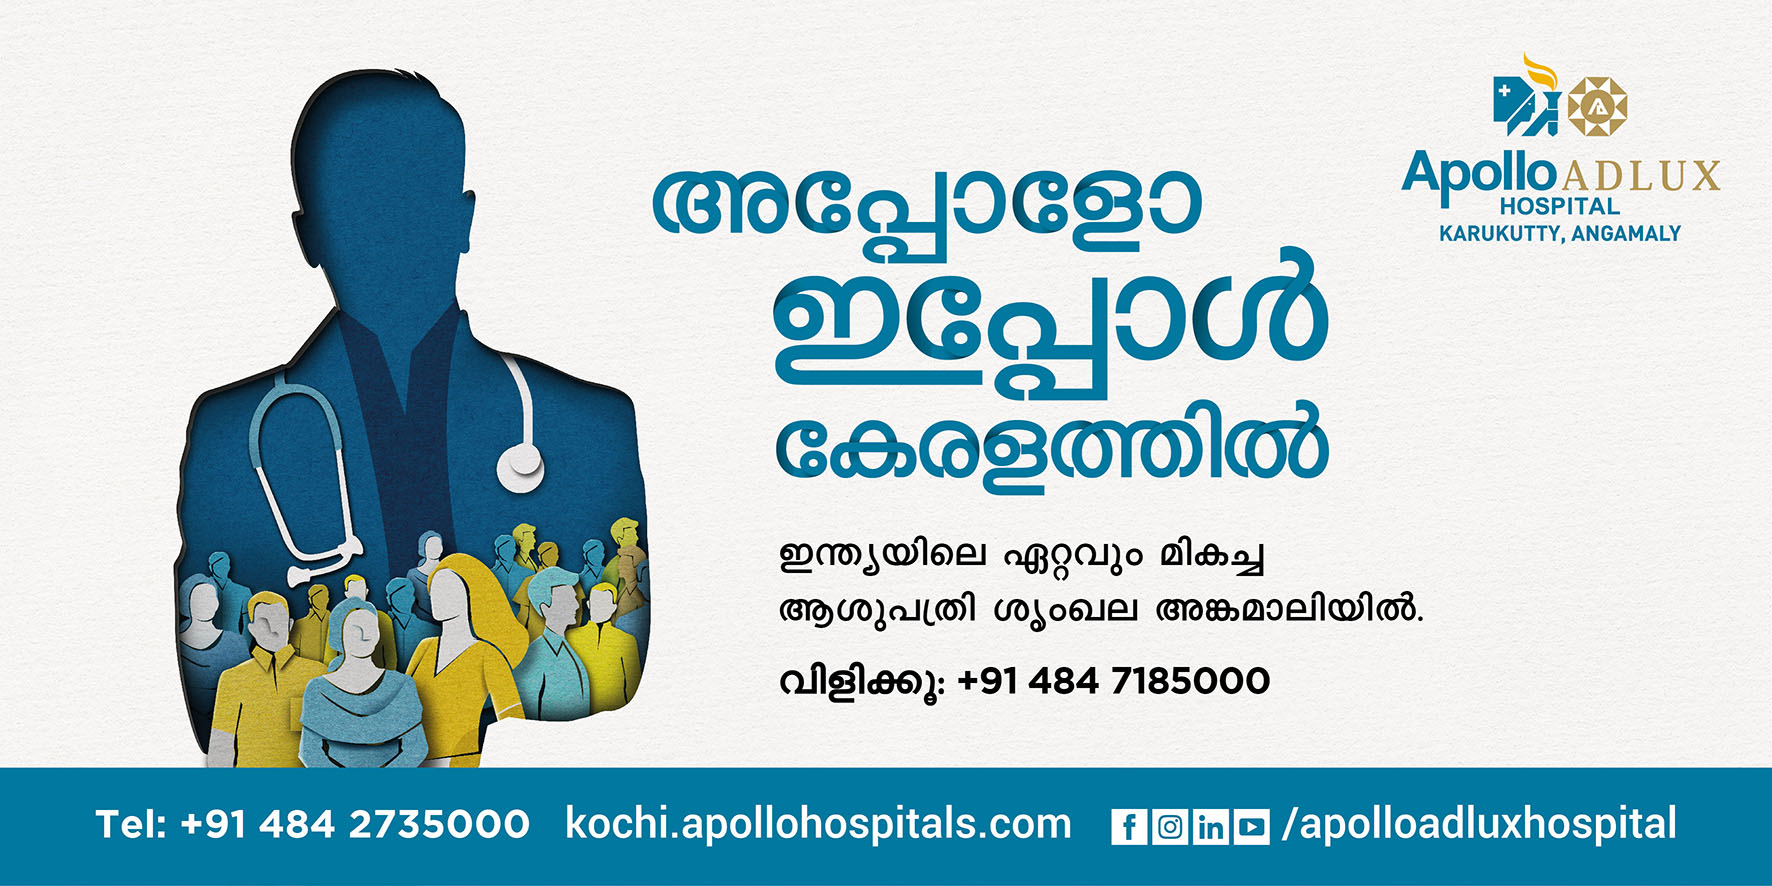 Apollo Adlux Hospital - Now in Kerala